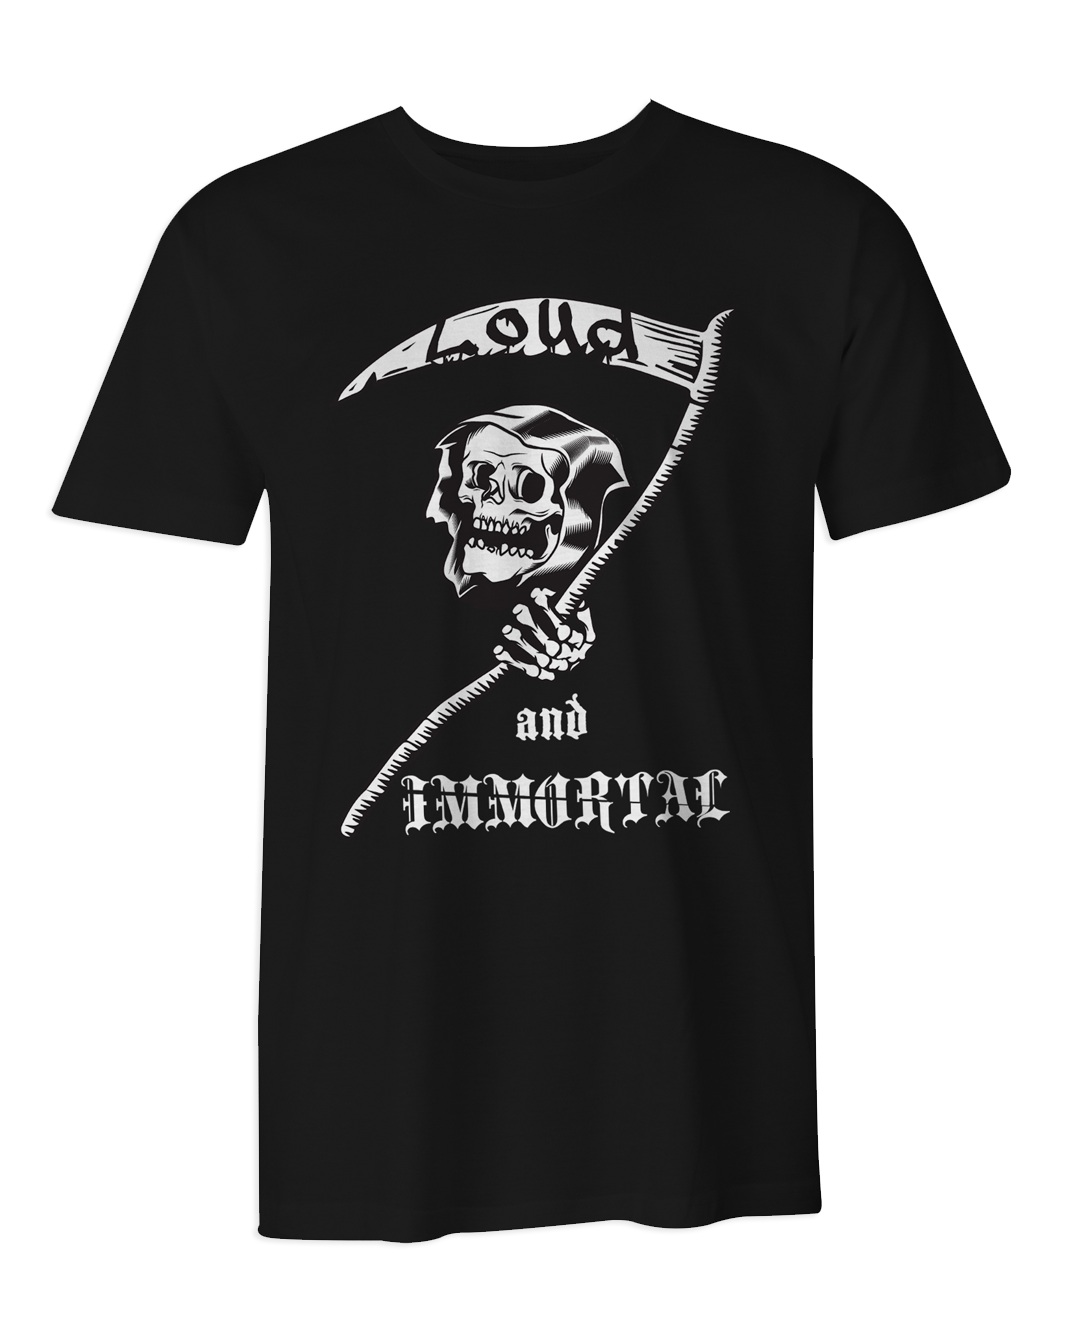 Loud & Immortal Reaper T-Shirt